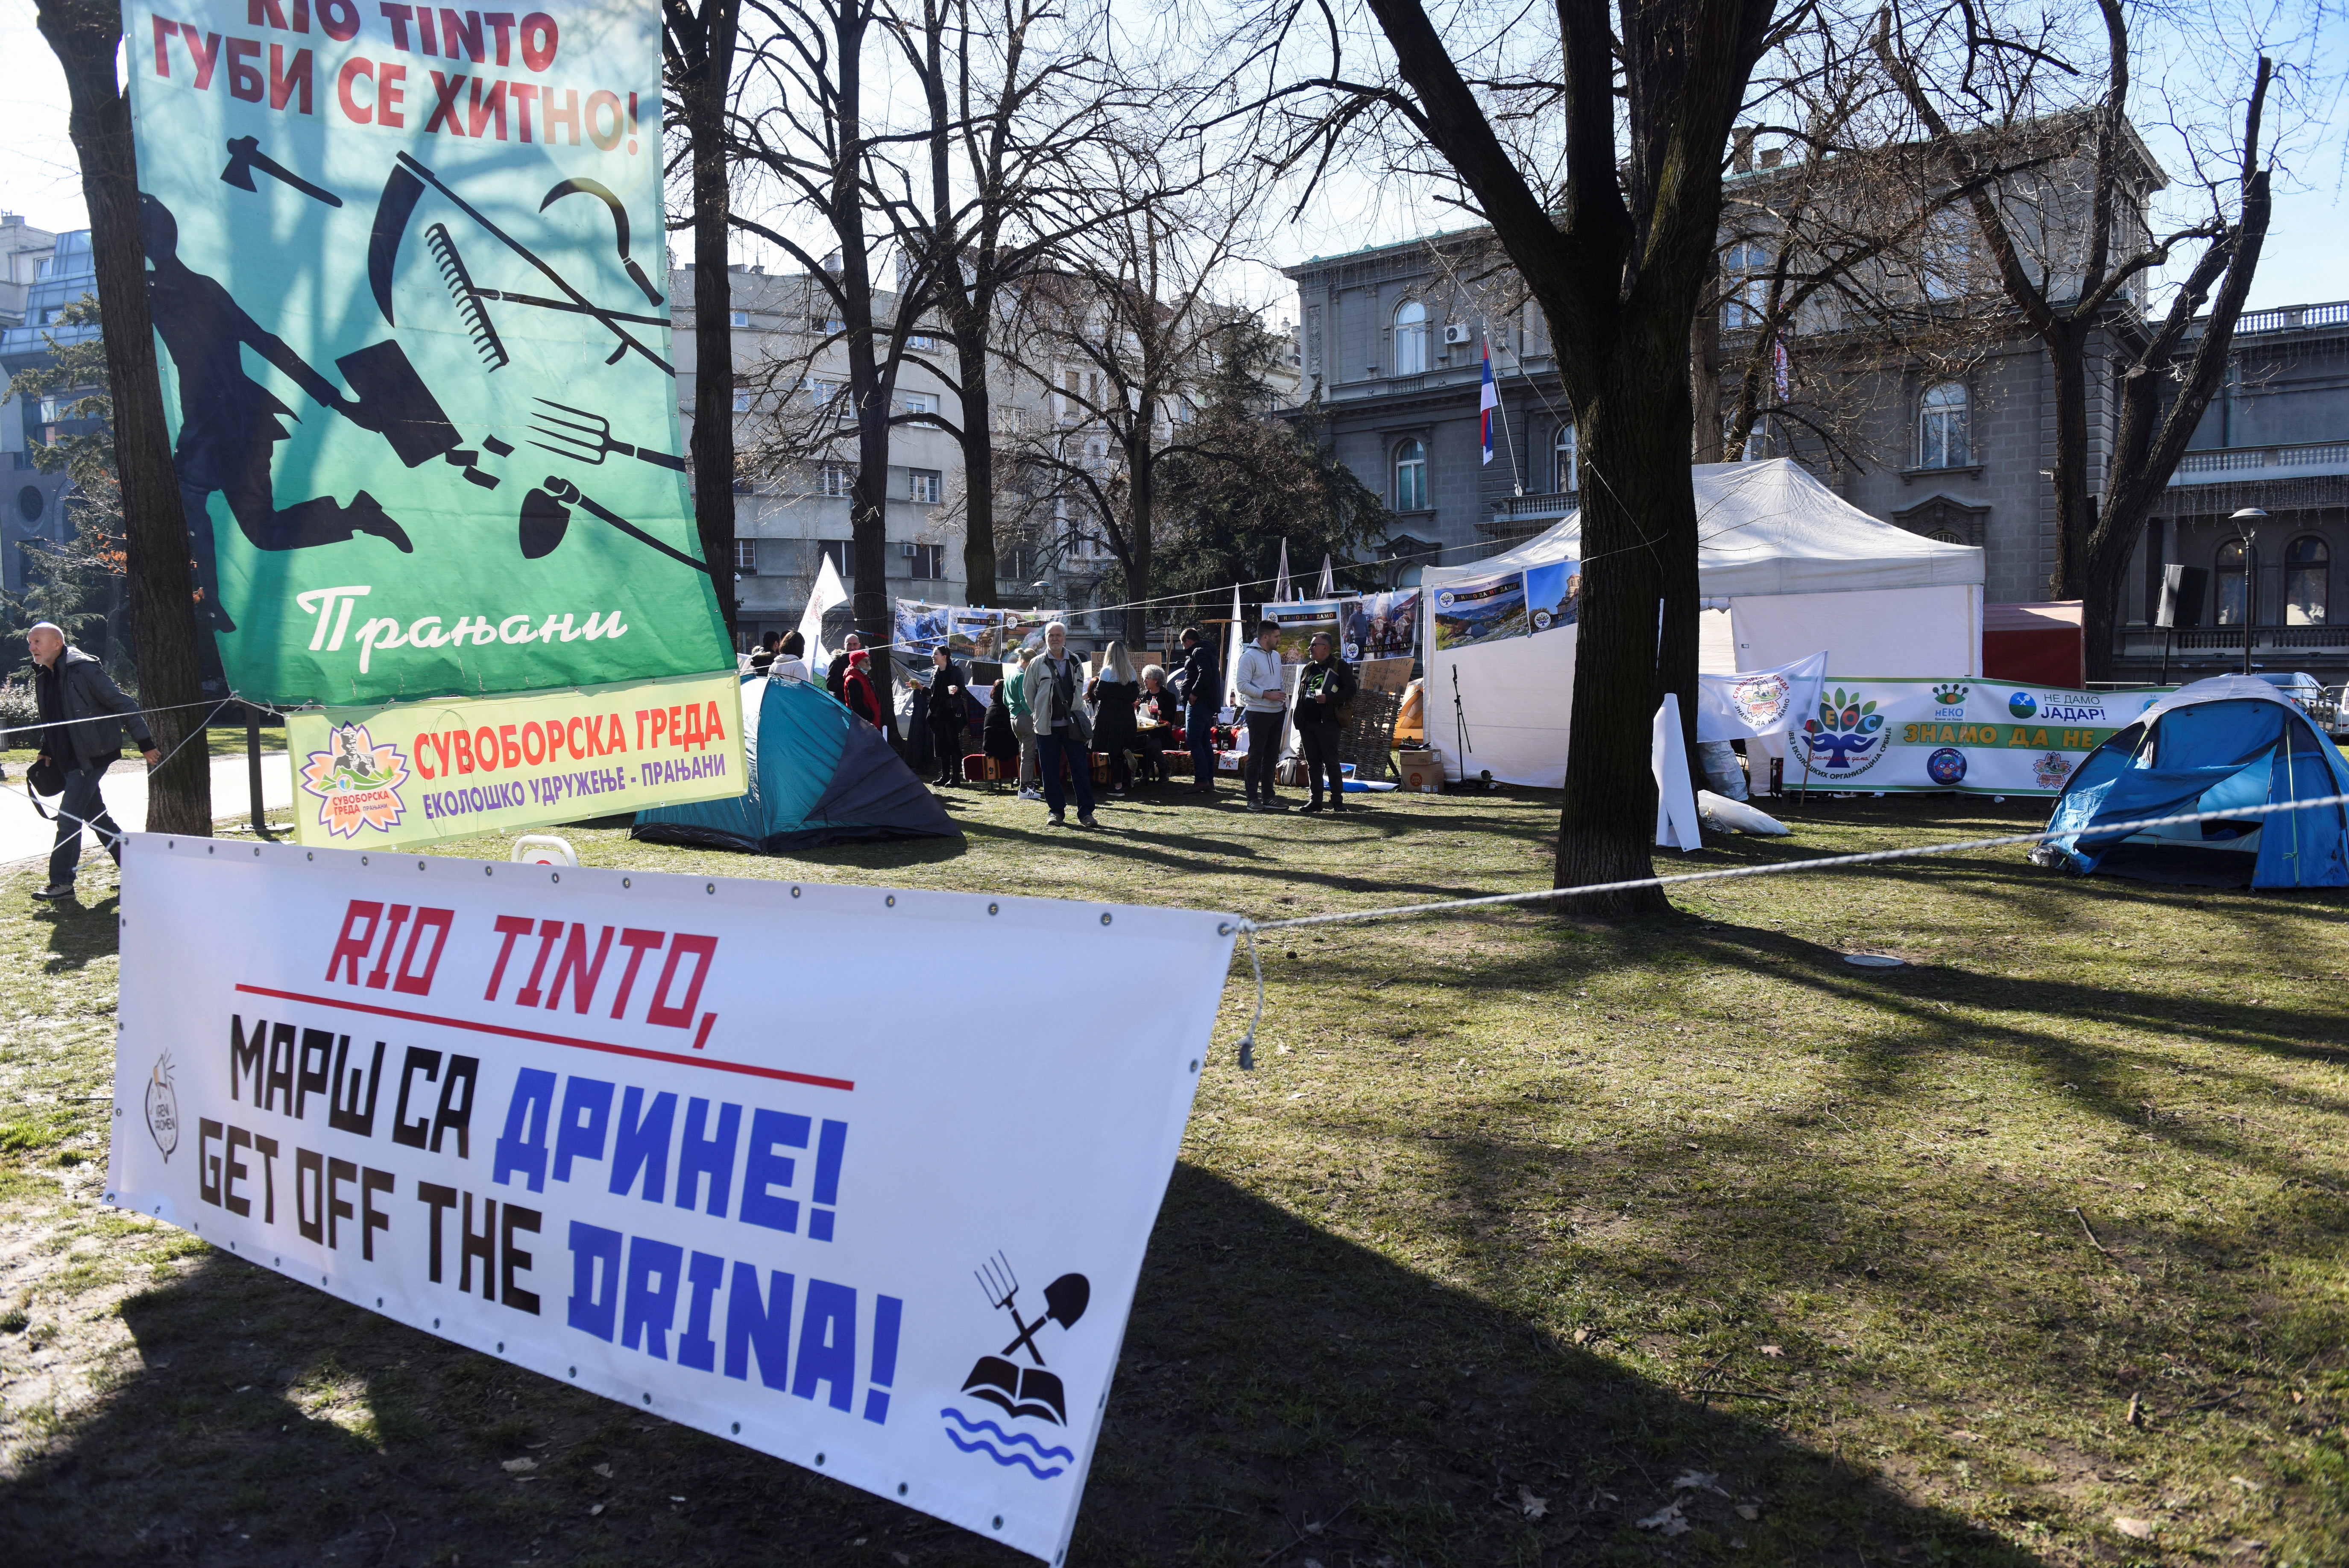 Activists set up tents demanding ban on lithium exploitation, in Belgrade